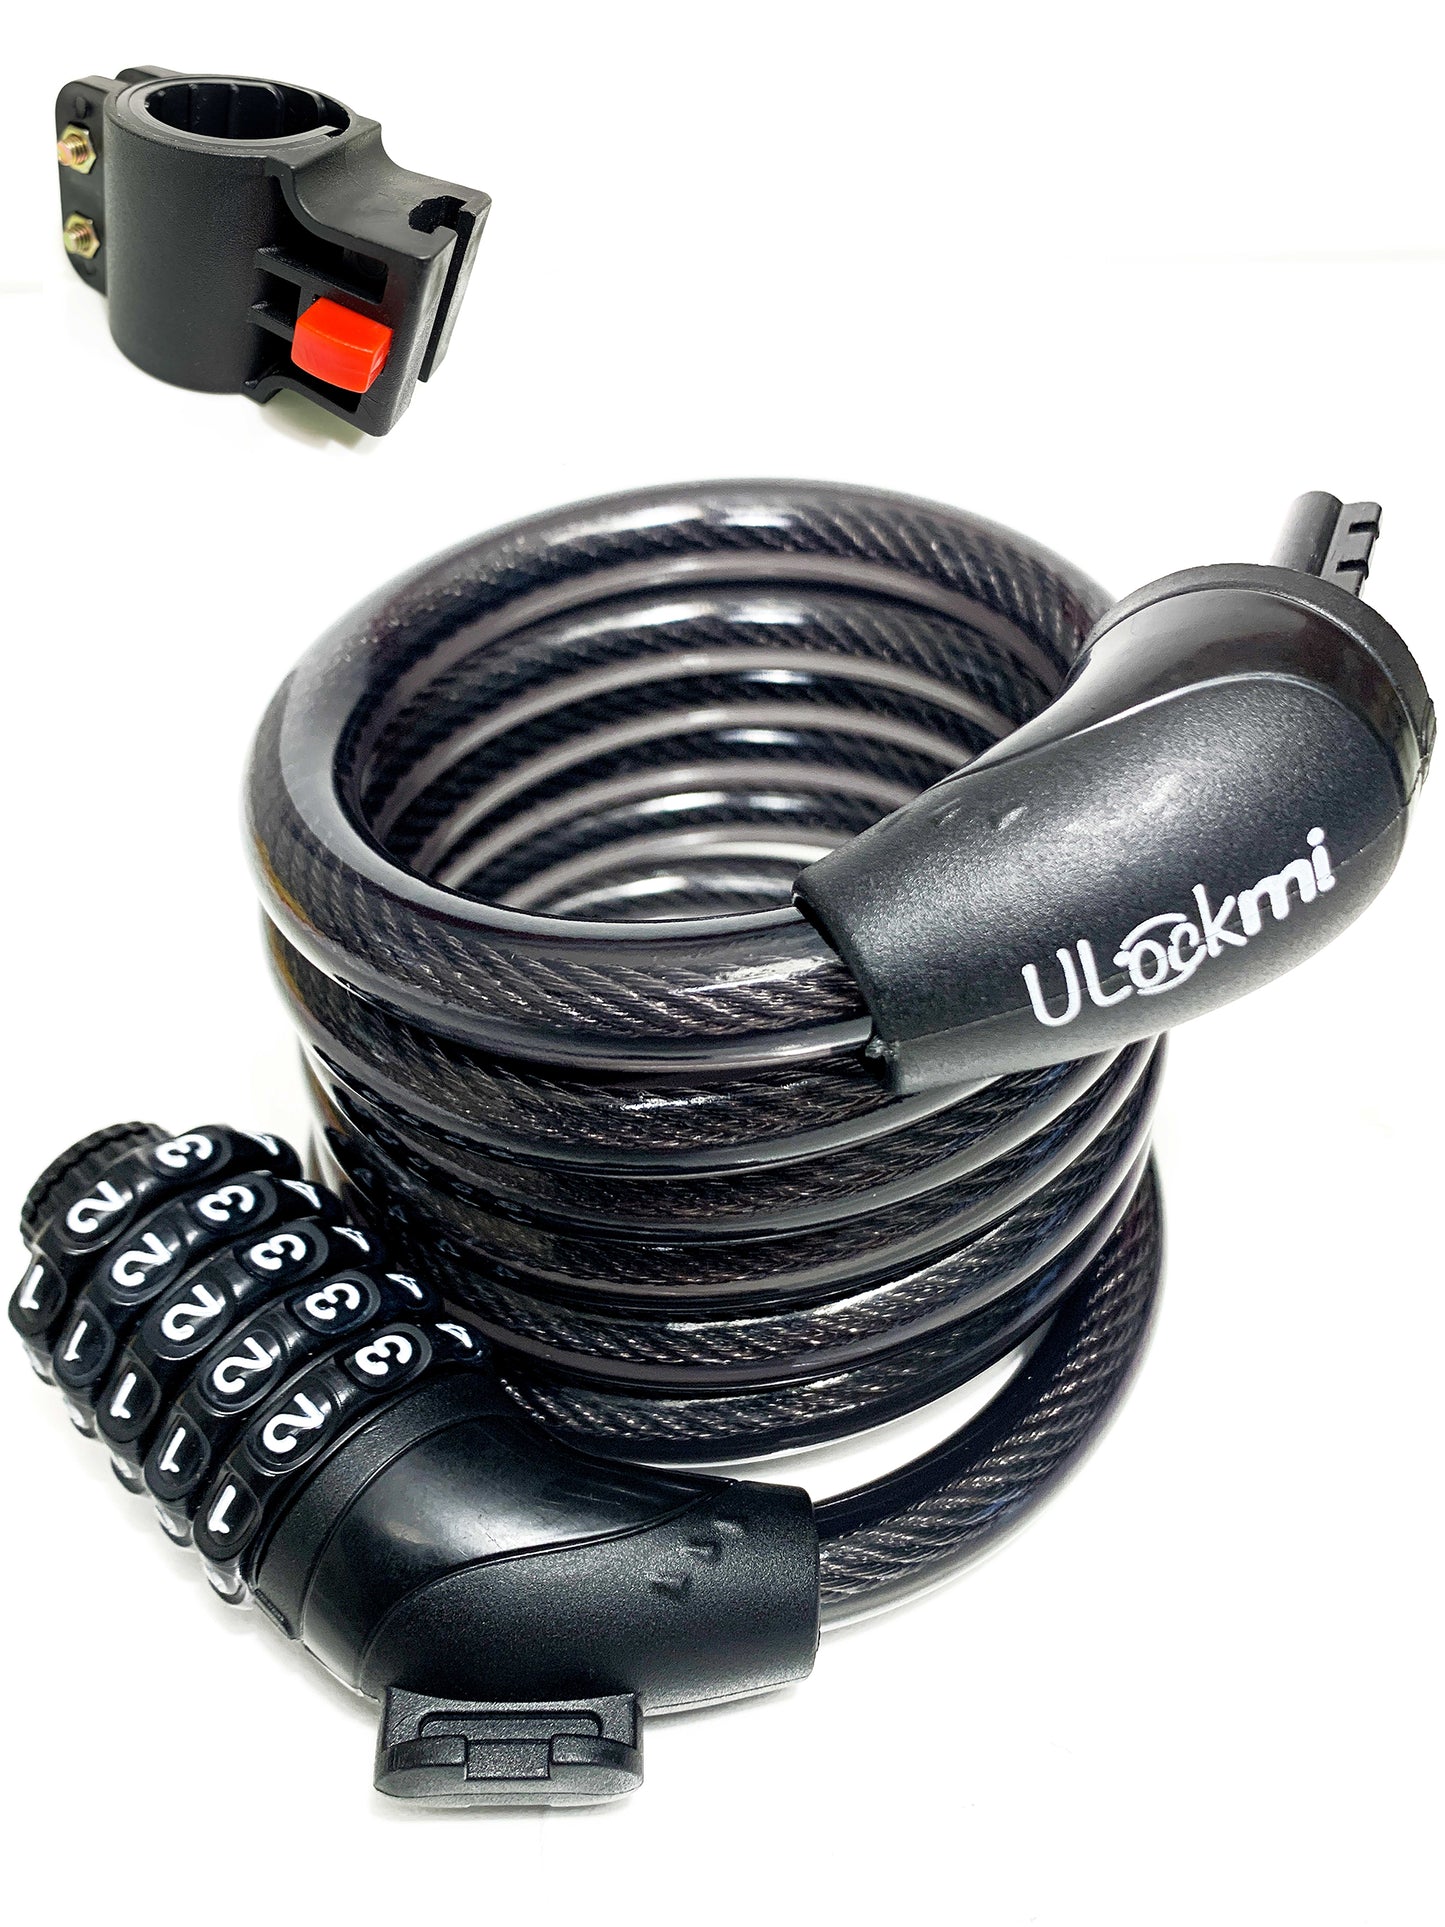 Ulockmi 5D Heavy-Duty Bike Lock: 180cm x 12mm Cable, Resettable Combination, Mounting Bracket